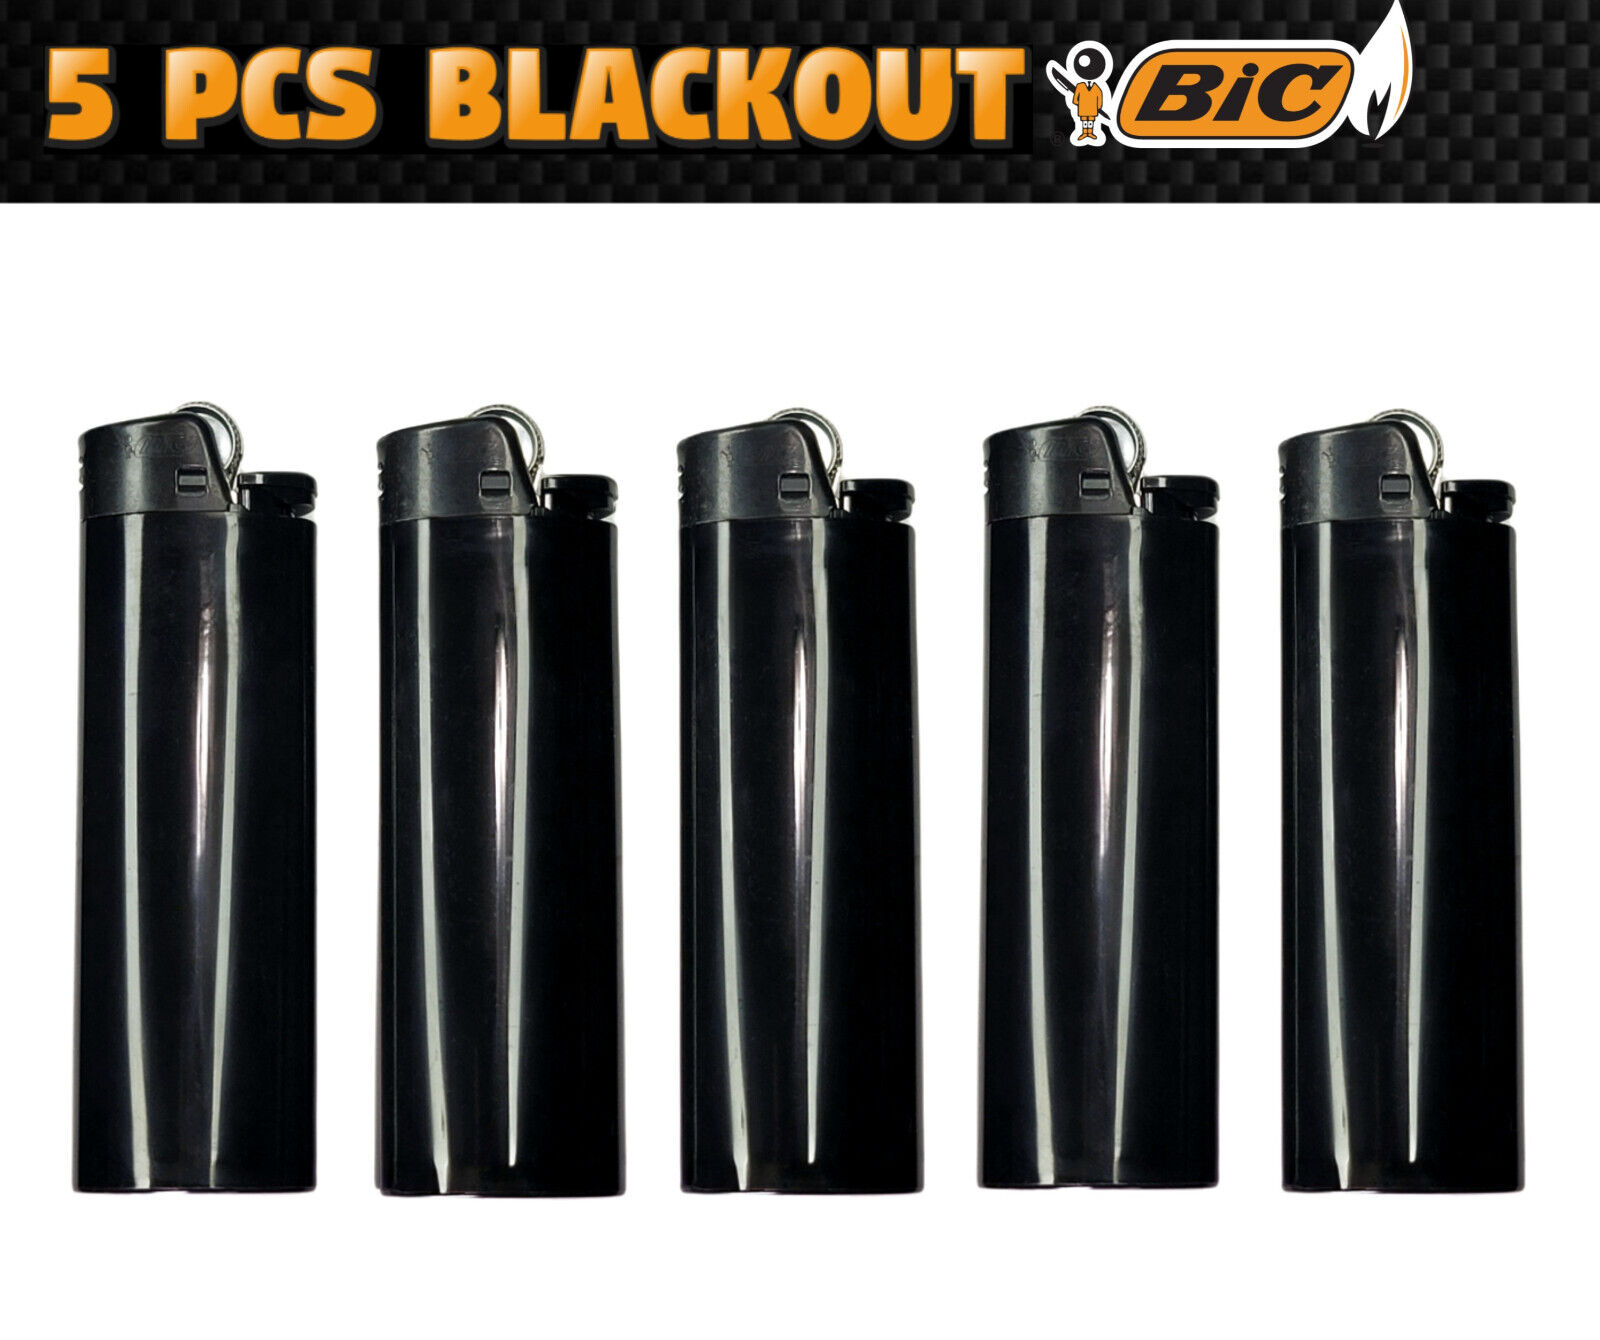 5 Pk Bic Blackout Lighter Limited Edition All Black NEW Full Sz Maxi J26 France